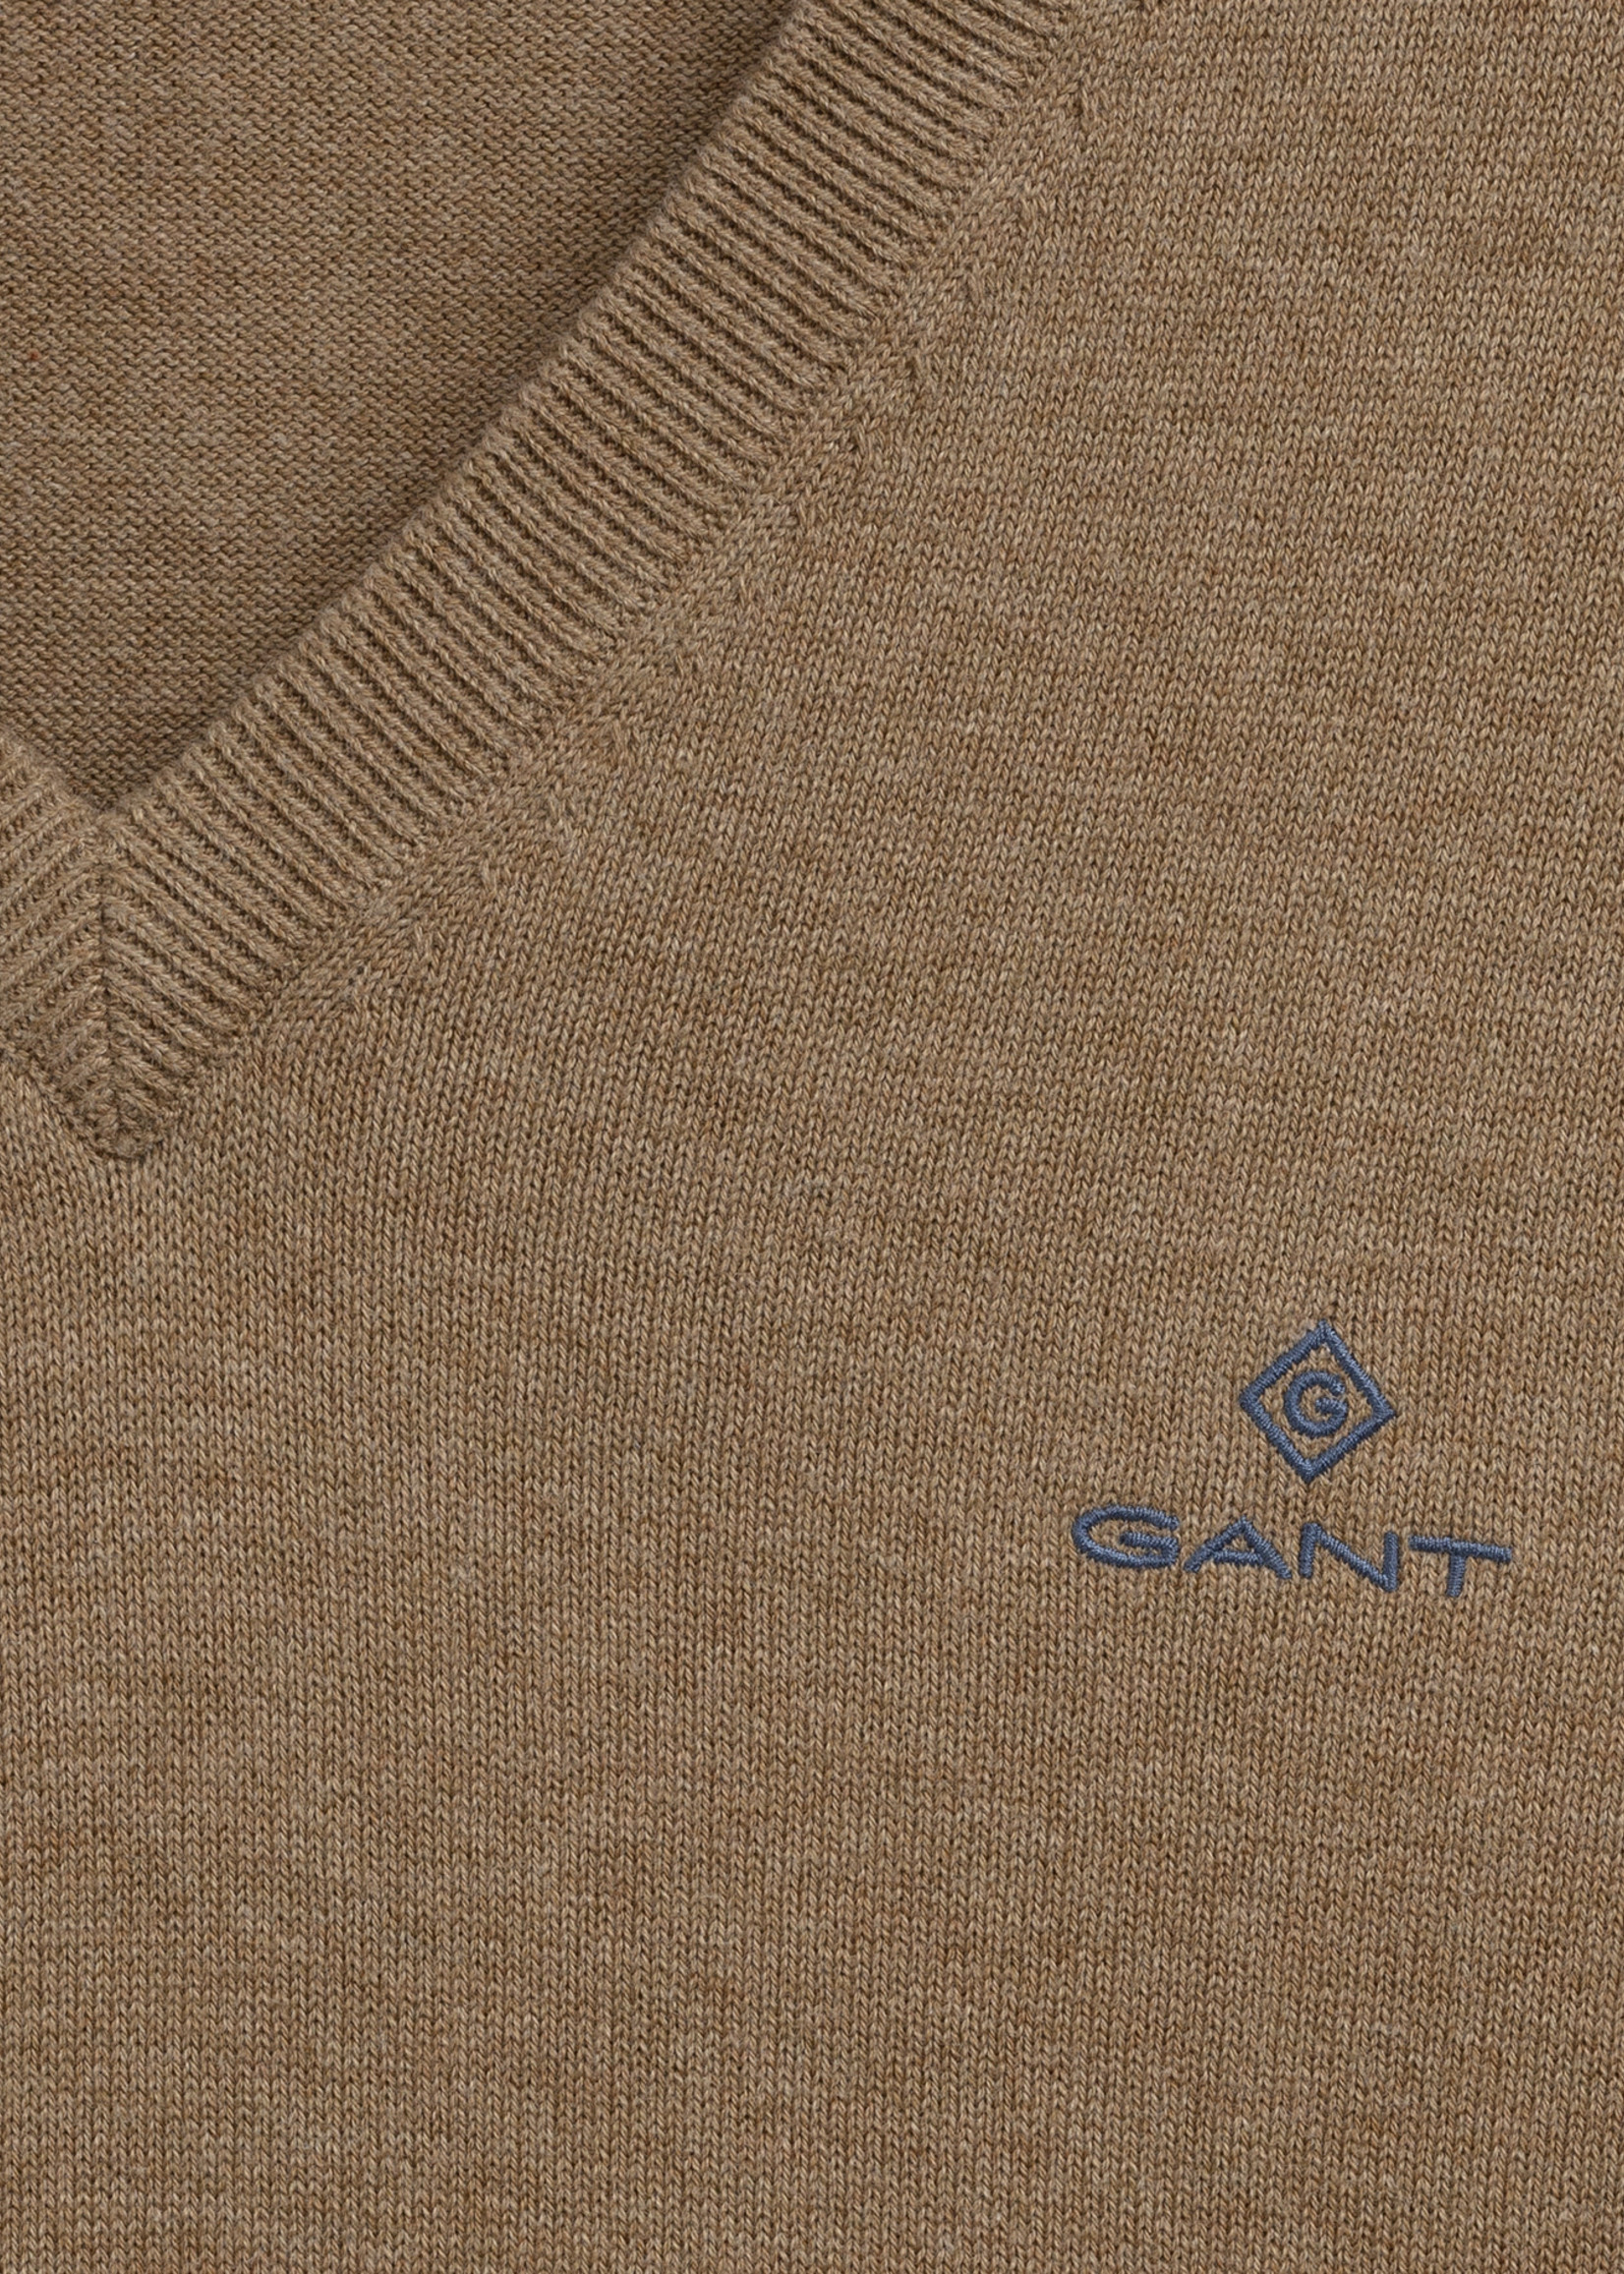 GANT Classic Cotton V-Neck Jumper